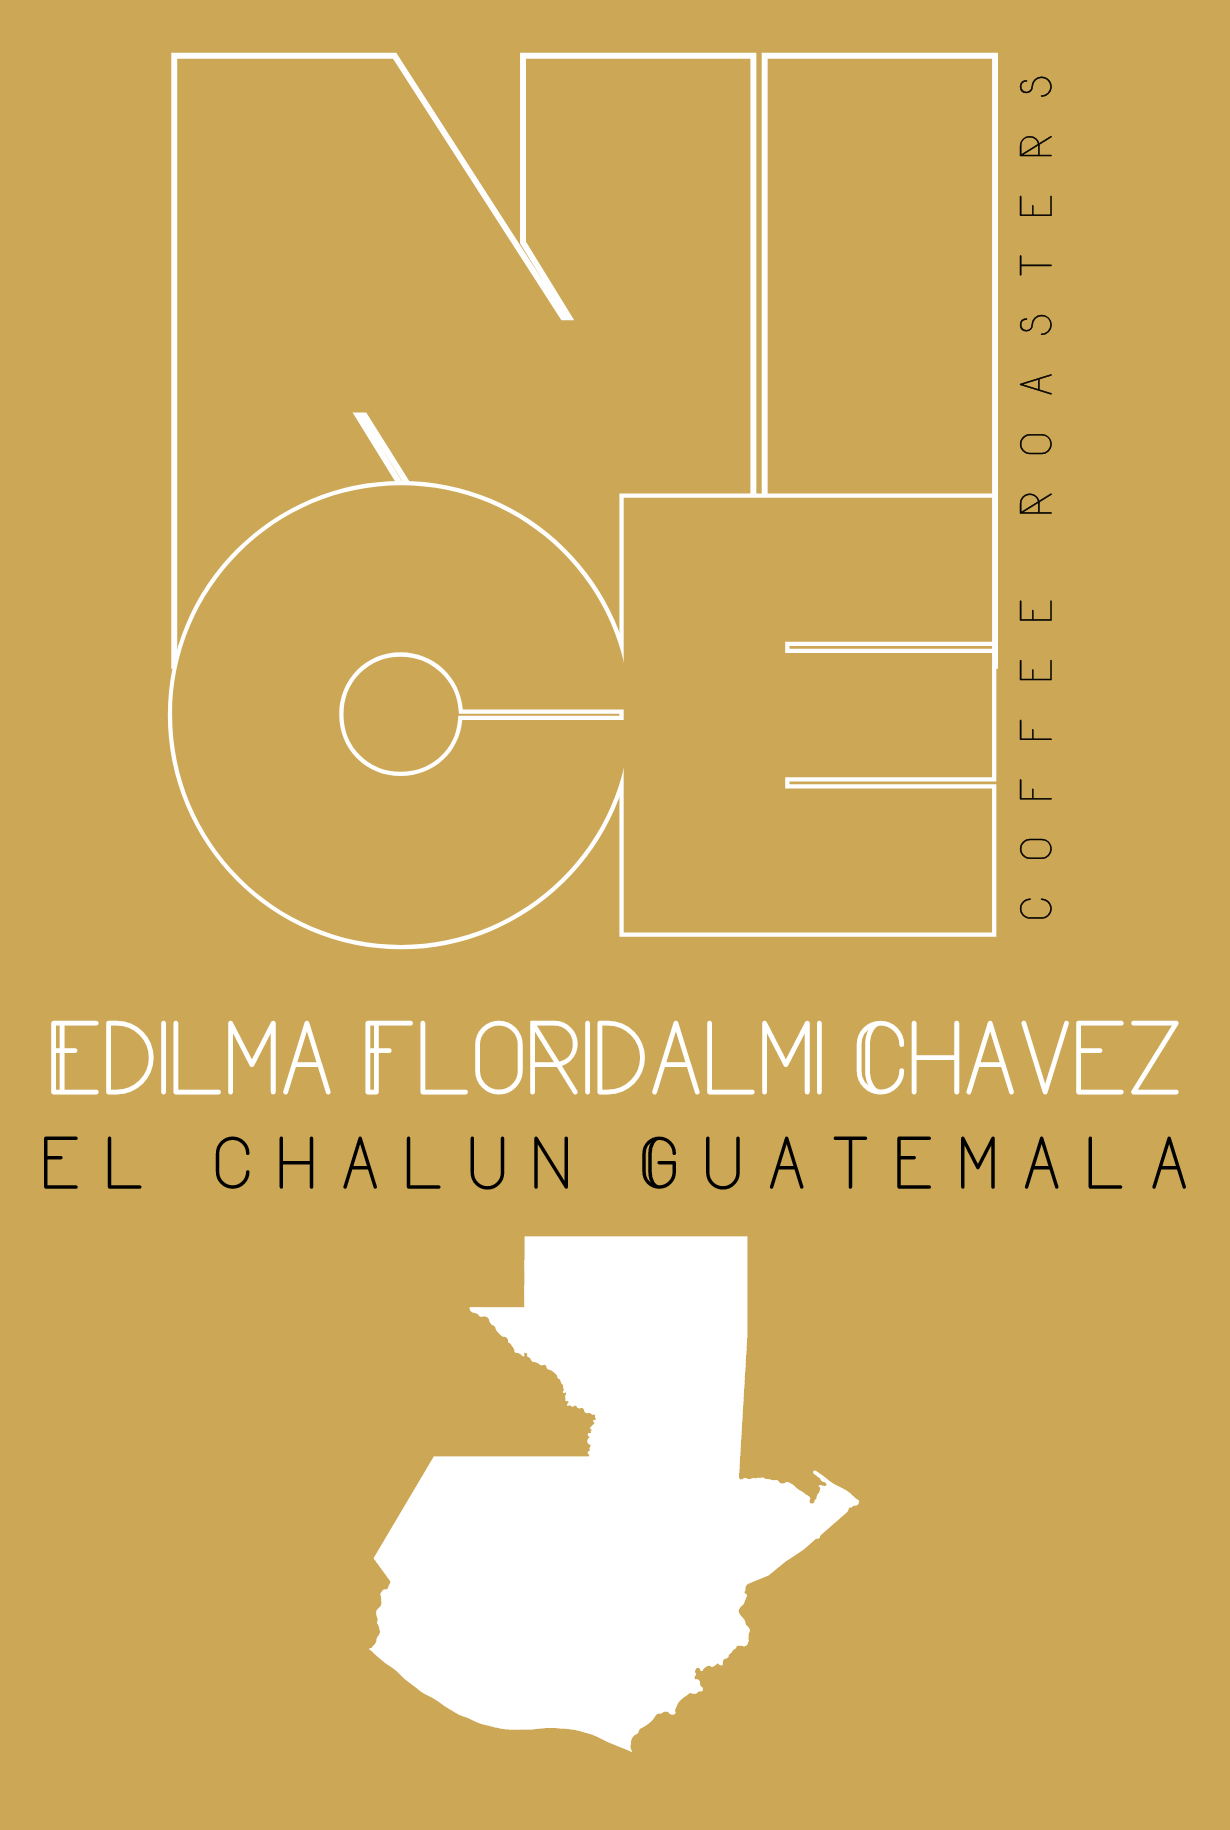 Nice Coffee Roasters logo. Edilma Floridalmi Chavez. El  Chalun Guatemala. Image of Guatemala the Country in white. Yellow background.